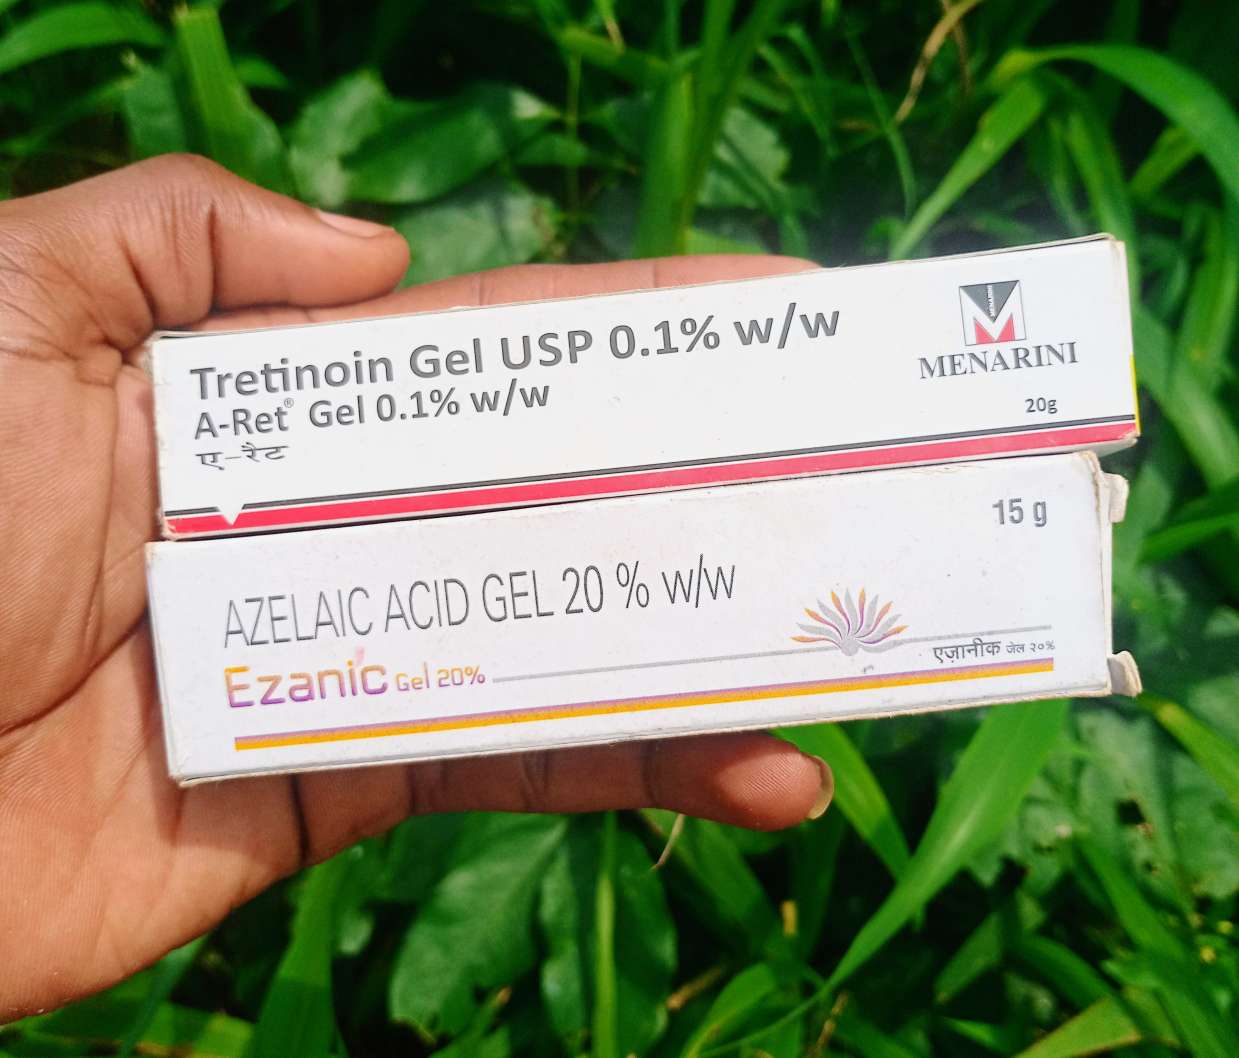 Tretinoin and Azelaic Acid Together